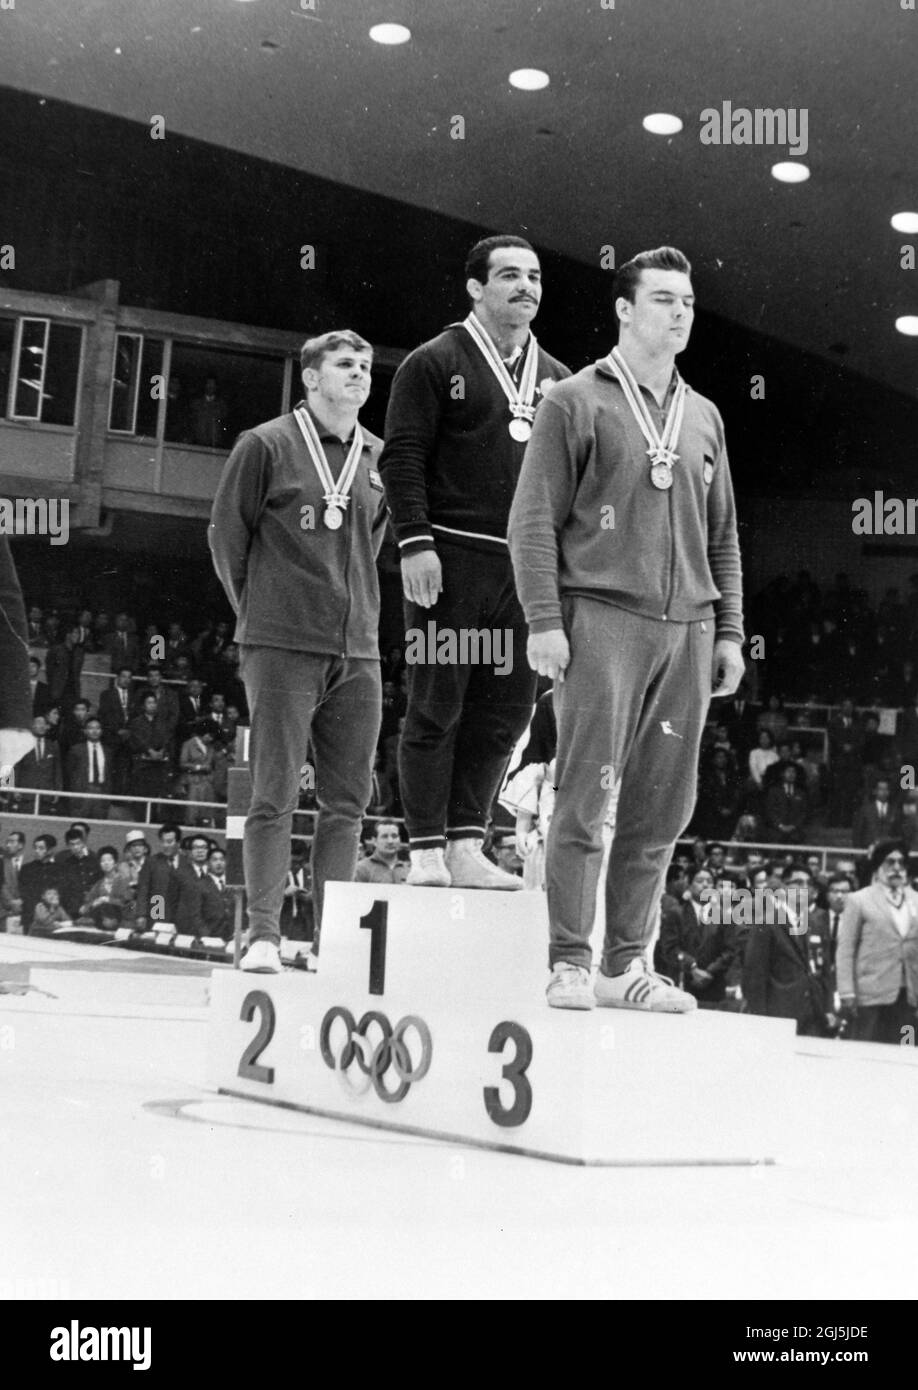 OLYMPICS, OLYMPIC SPORT GAMES - THE XVIII 18TH OLYMPIAD IN TOKYO, JAPAN - MEDAL PODIUM PRESENTATION OLYMPICS WRESTLING ALEXANDROV SVENSSON AND KIEHL PODIUM ; 21 OCTOBER 1964 Stock Photo